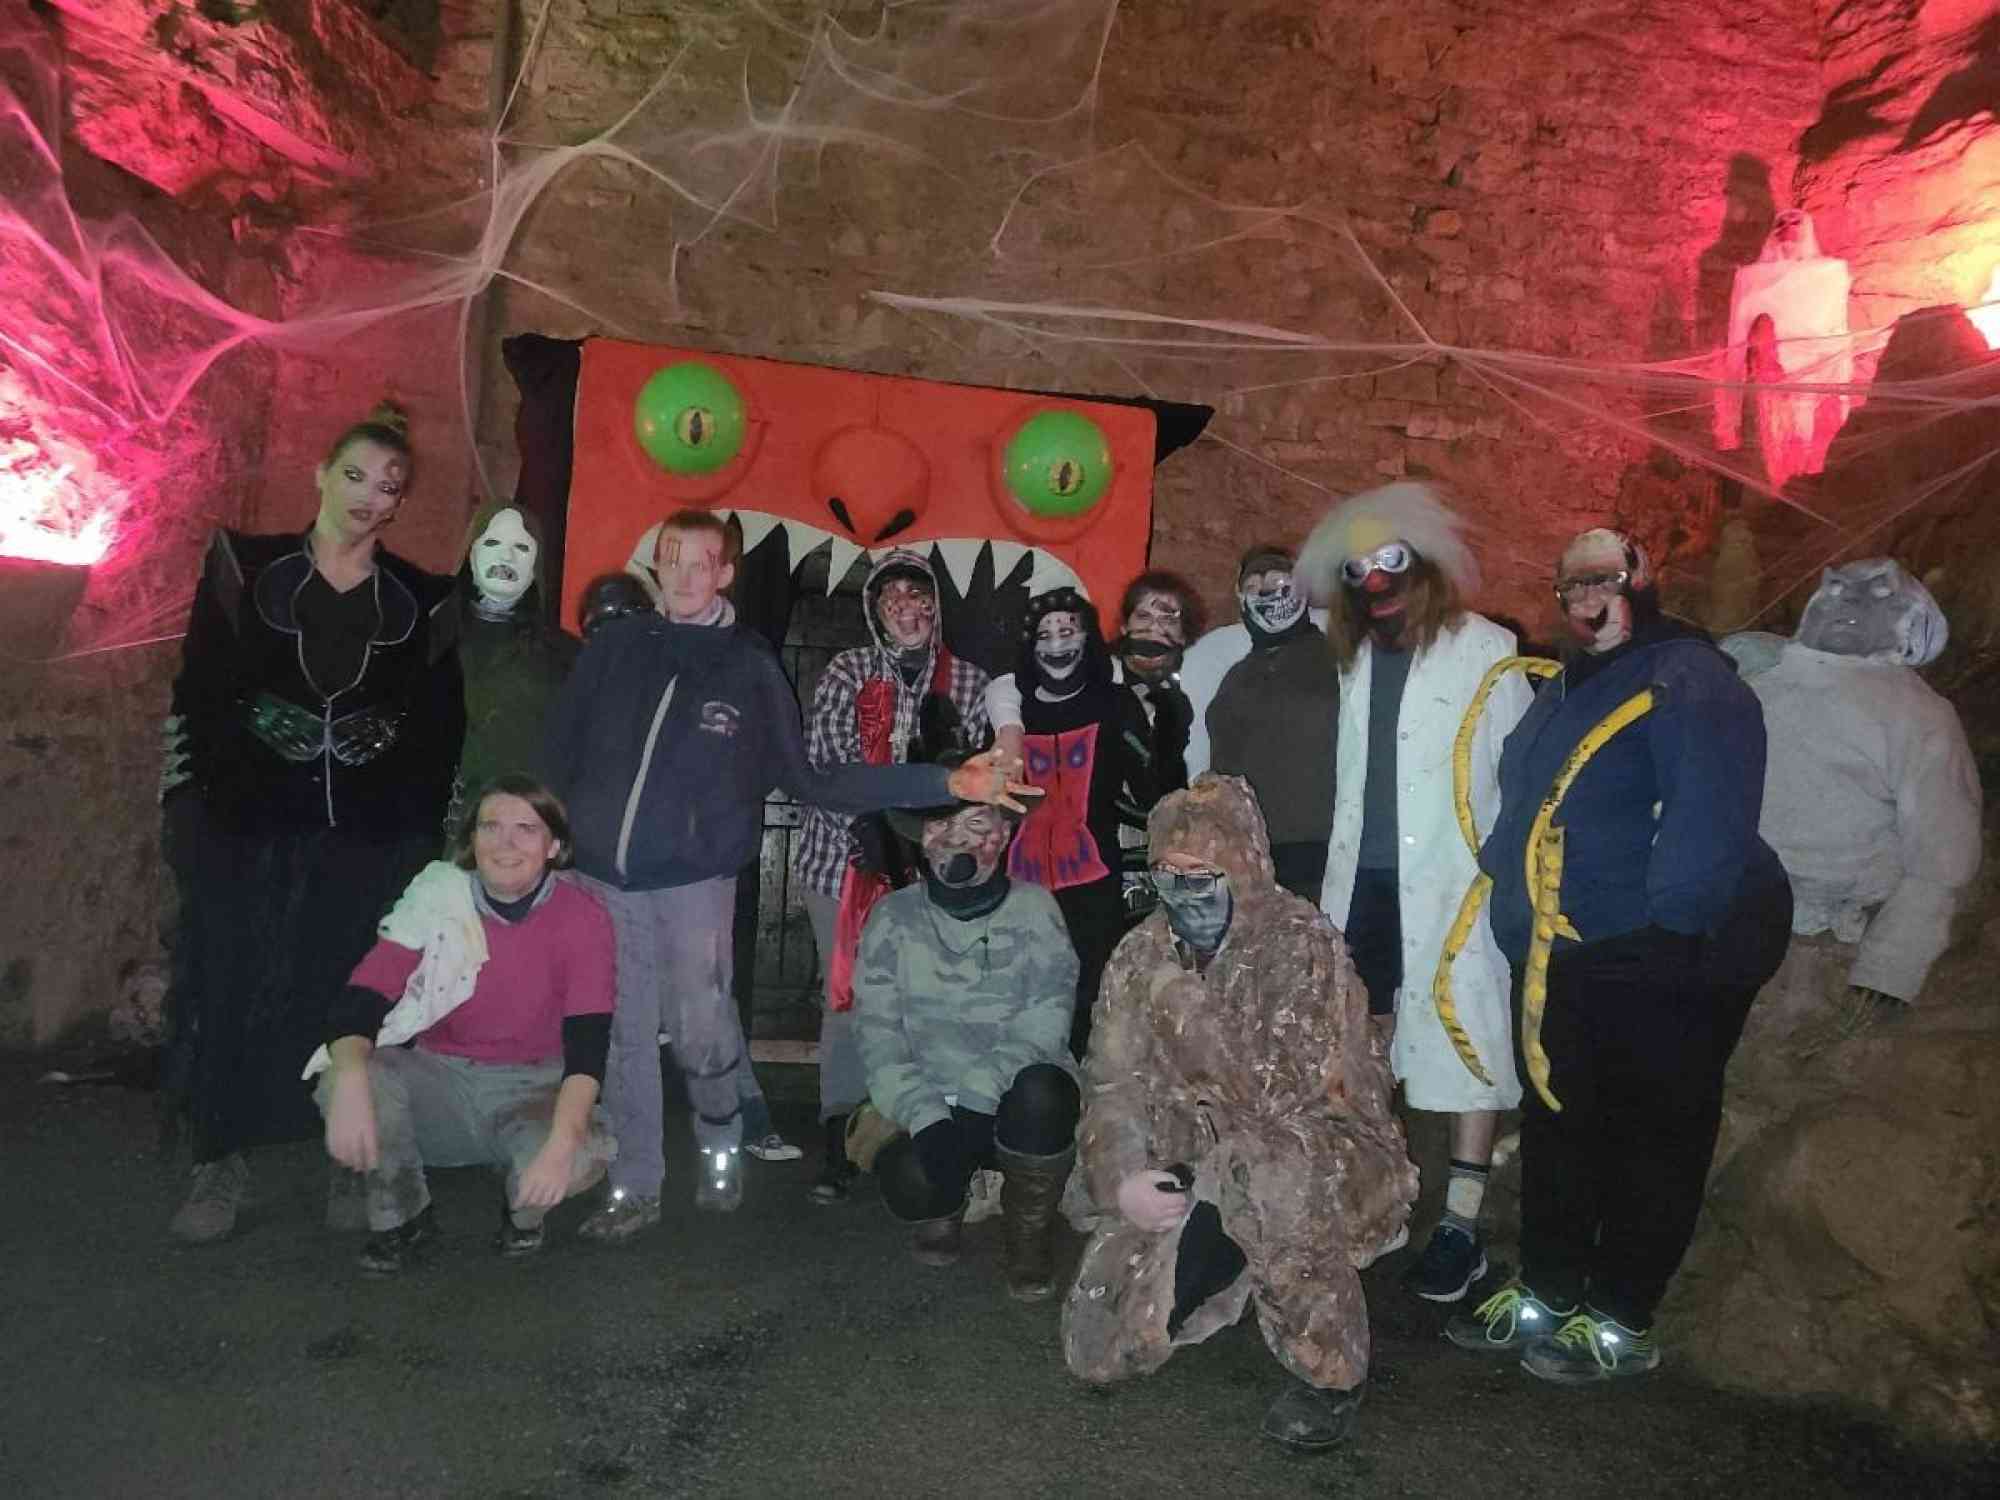 Lincoln caverns goblins